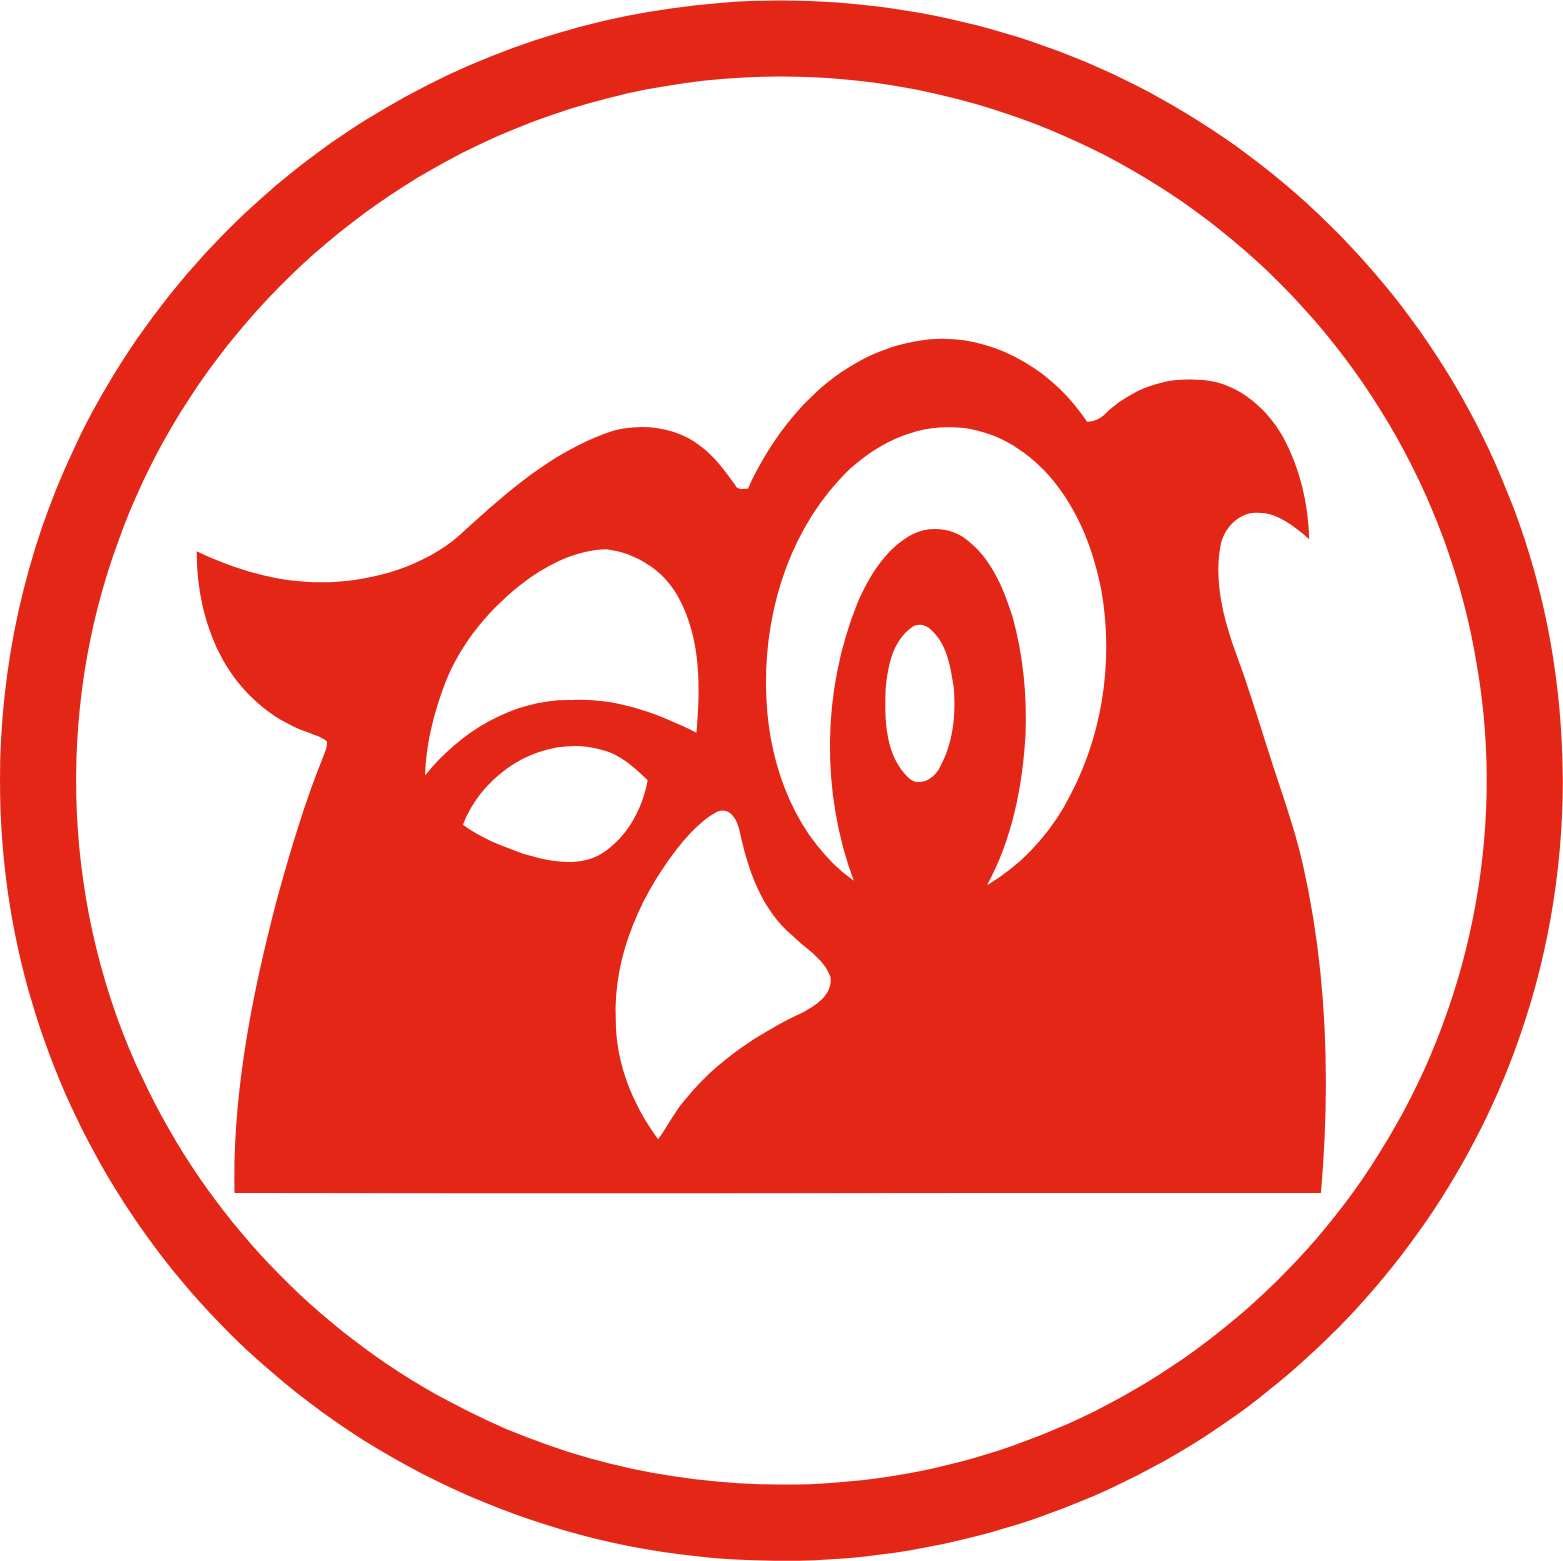 Alimentation Couche-Tard
 logo (PNG transparent)